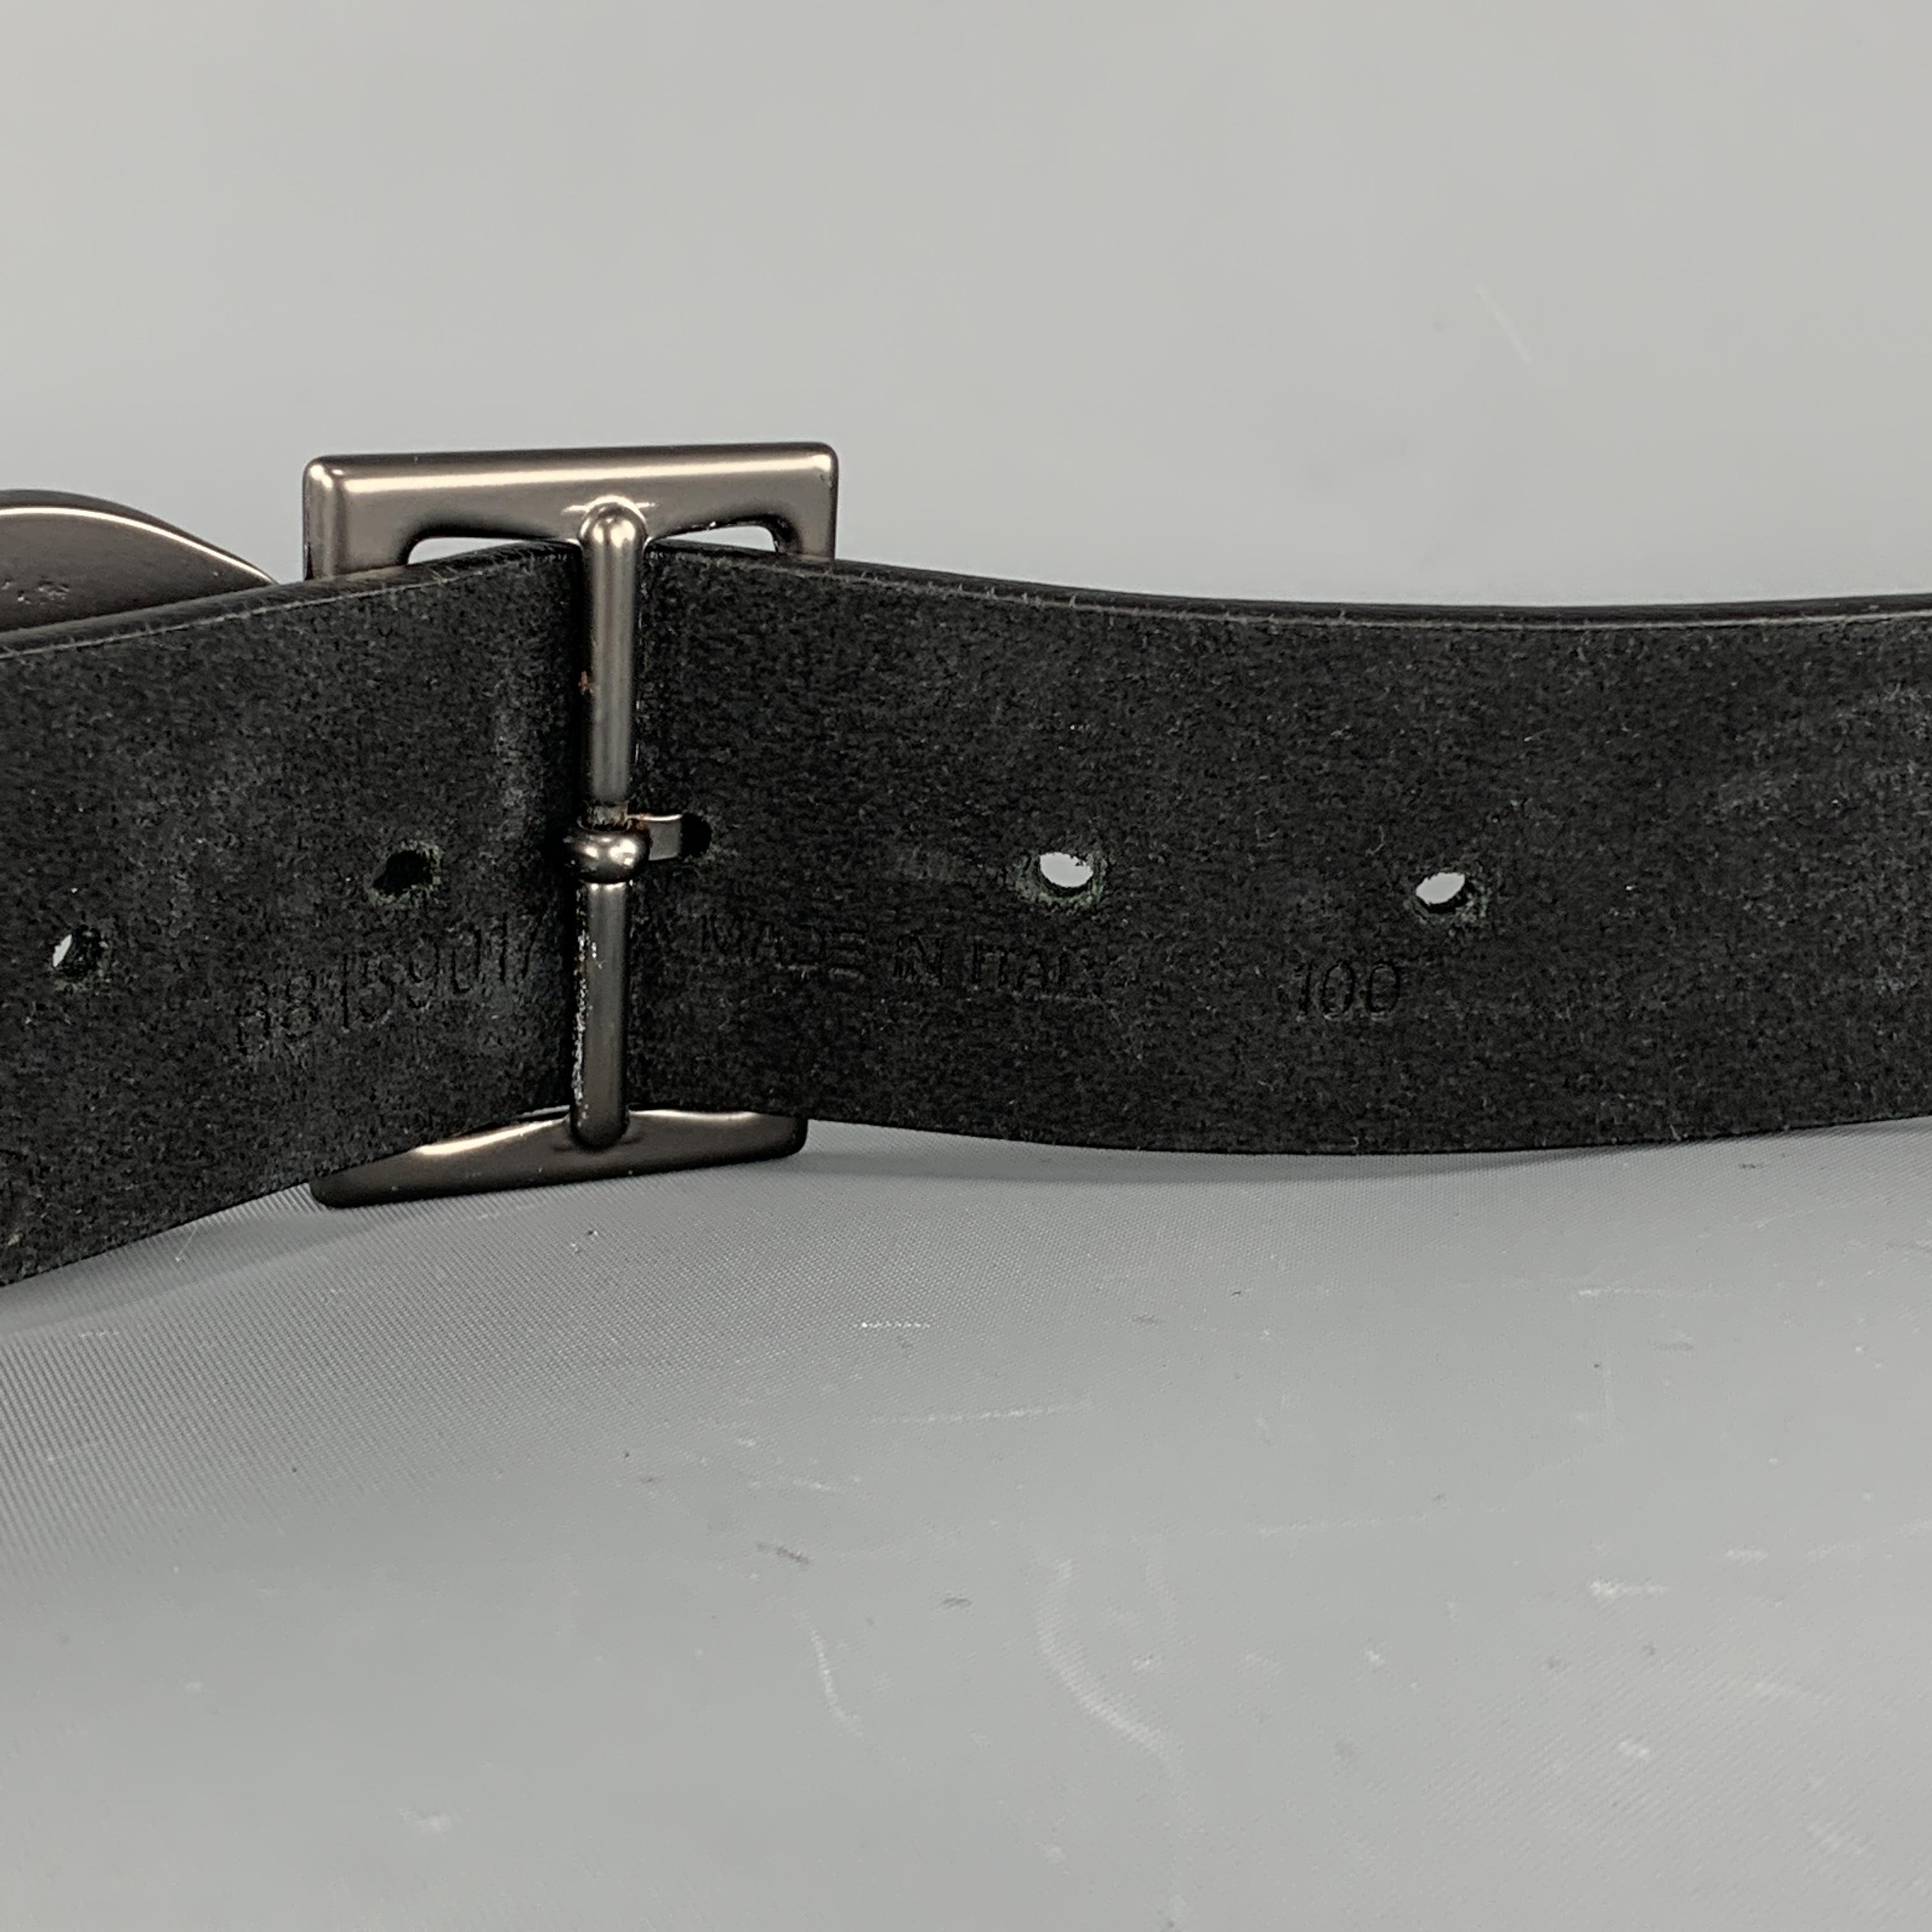 STONE ISLAND Size 34 Black Rubberized Leather Trim Belt 1